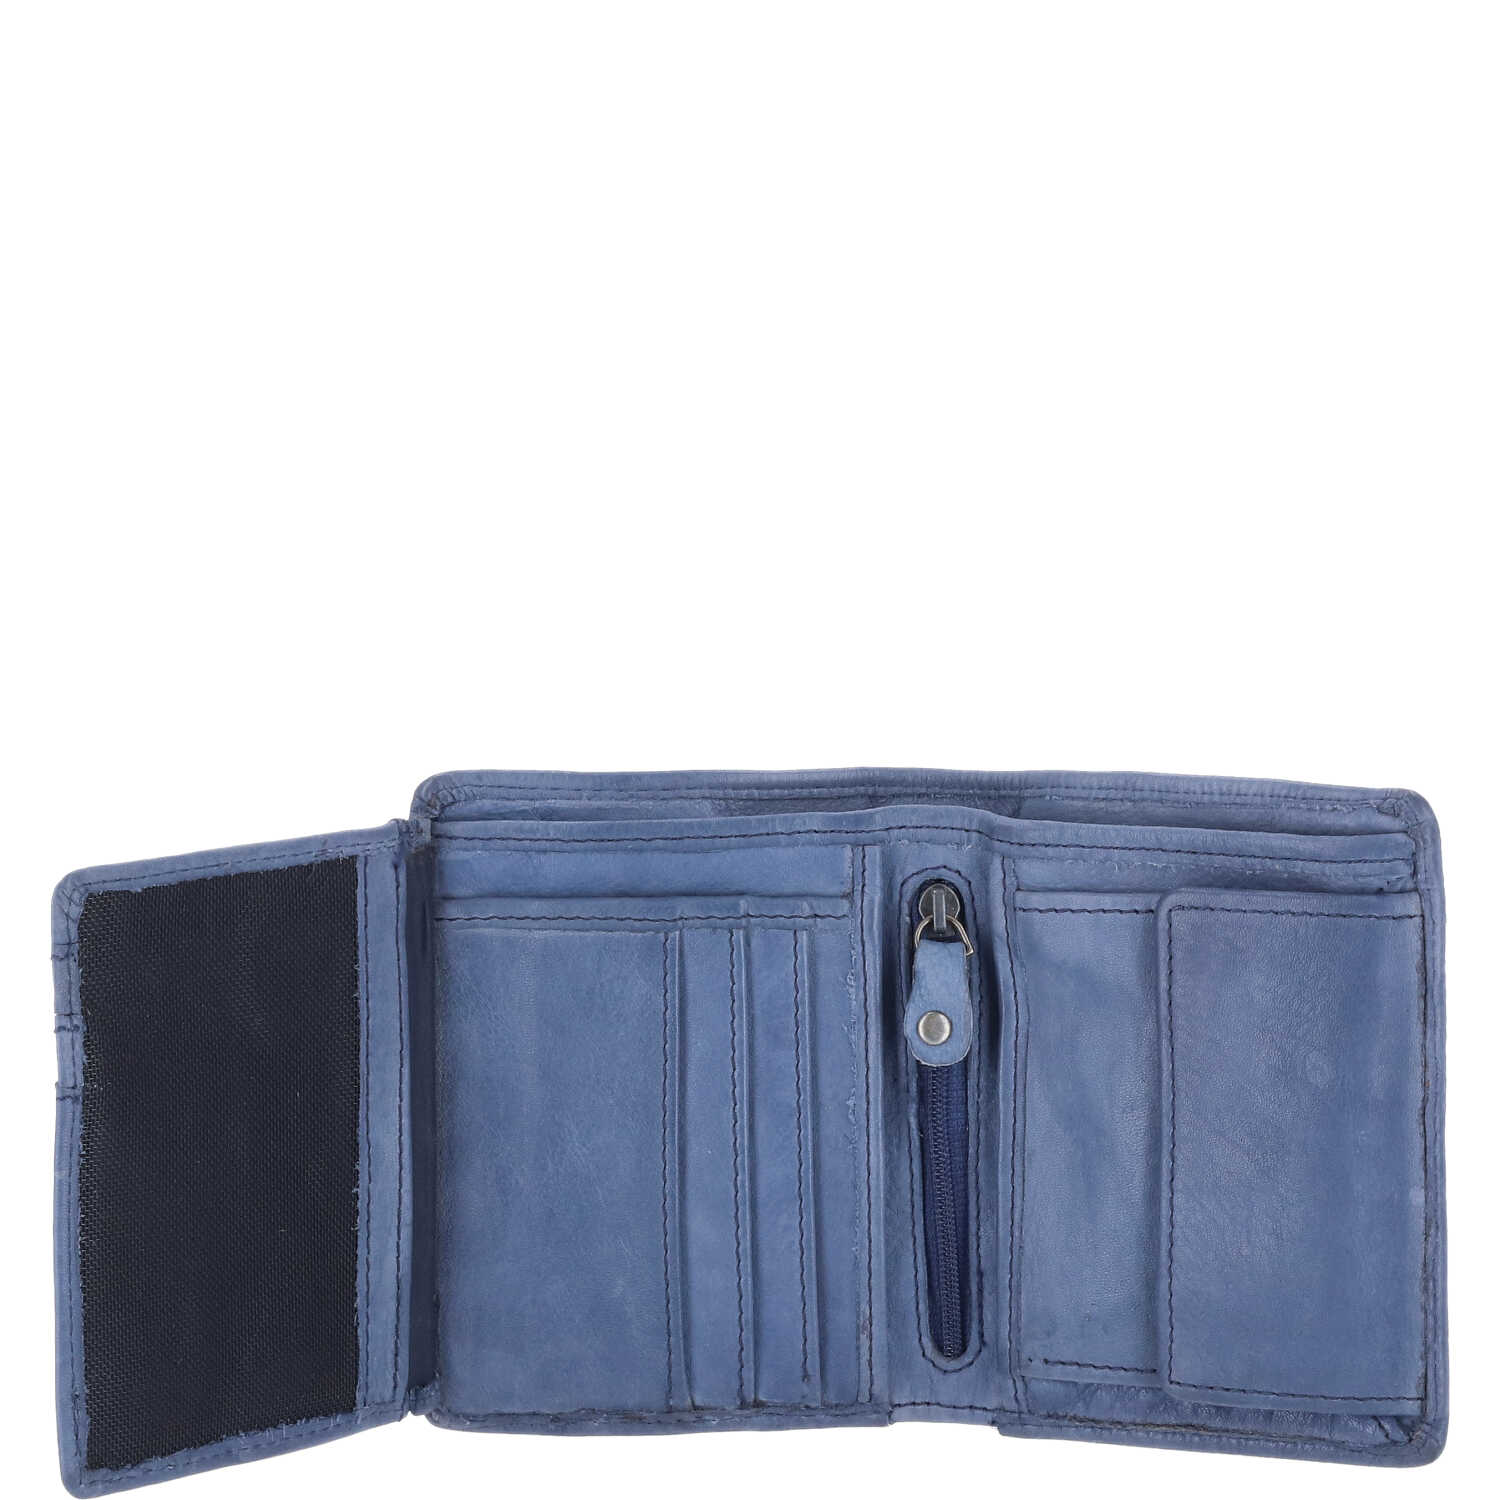 The Skandinavian Brand Mens Wallet Washed Leather blau